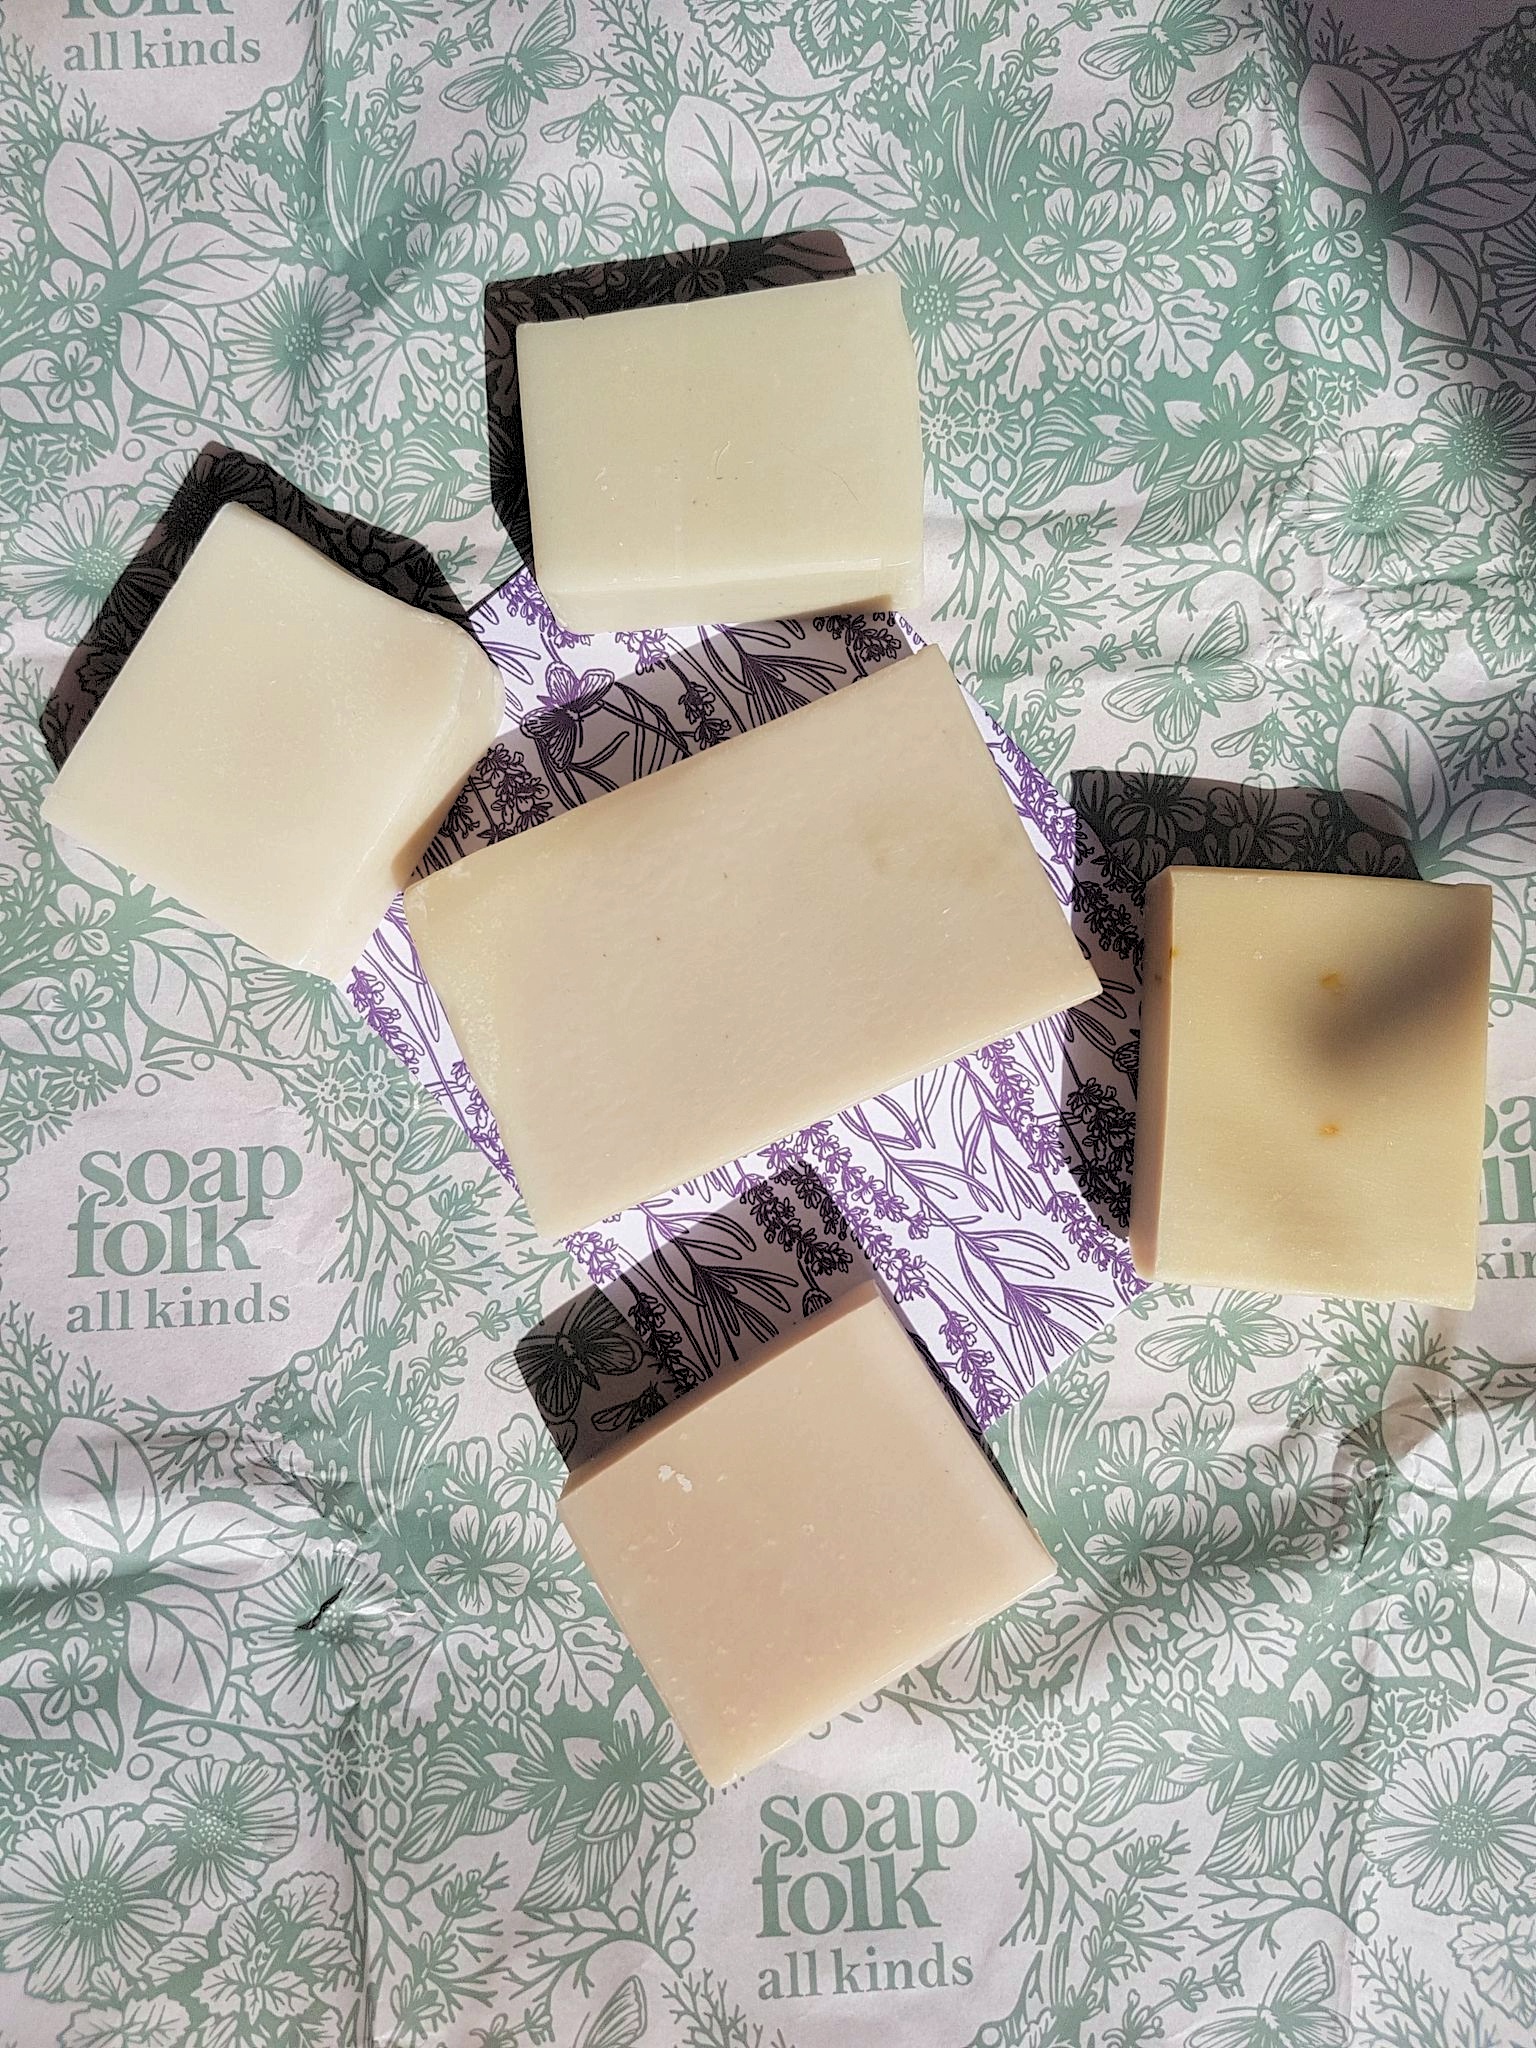 handmade natural soaps from Soap Folk